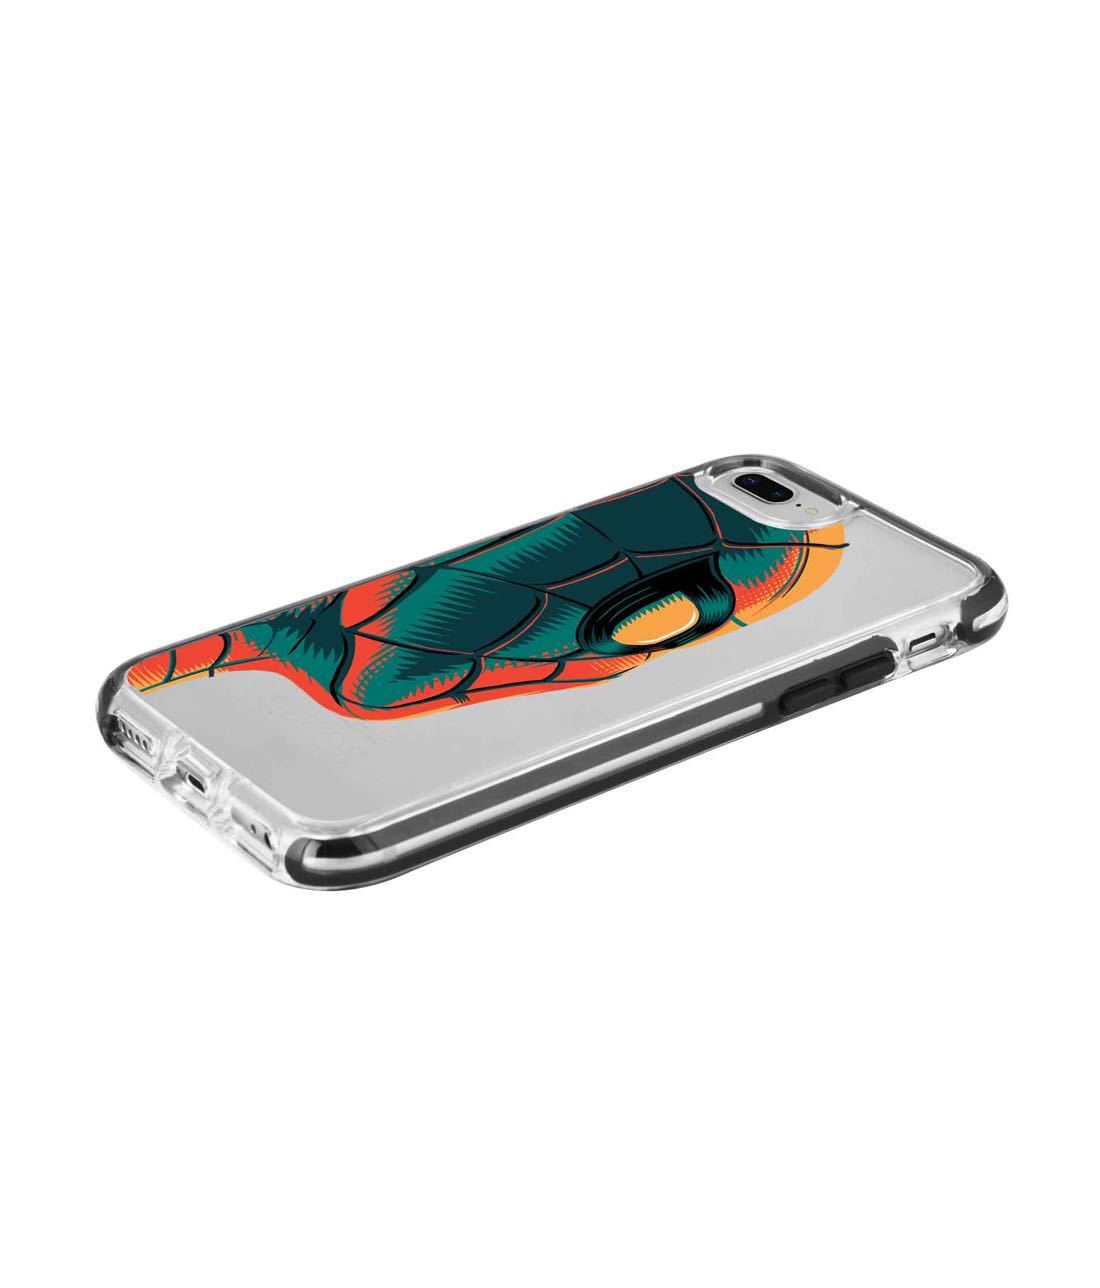 Illuminated Spiderman - Extreme Phone Case for iPhone 8 Plus